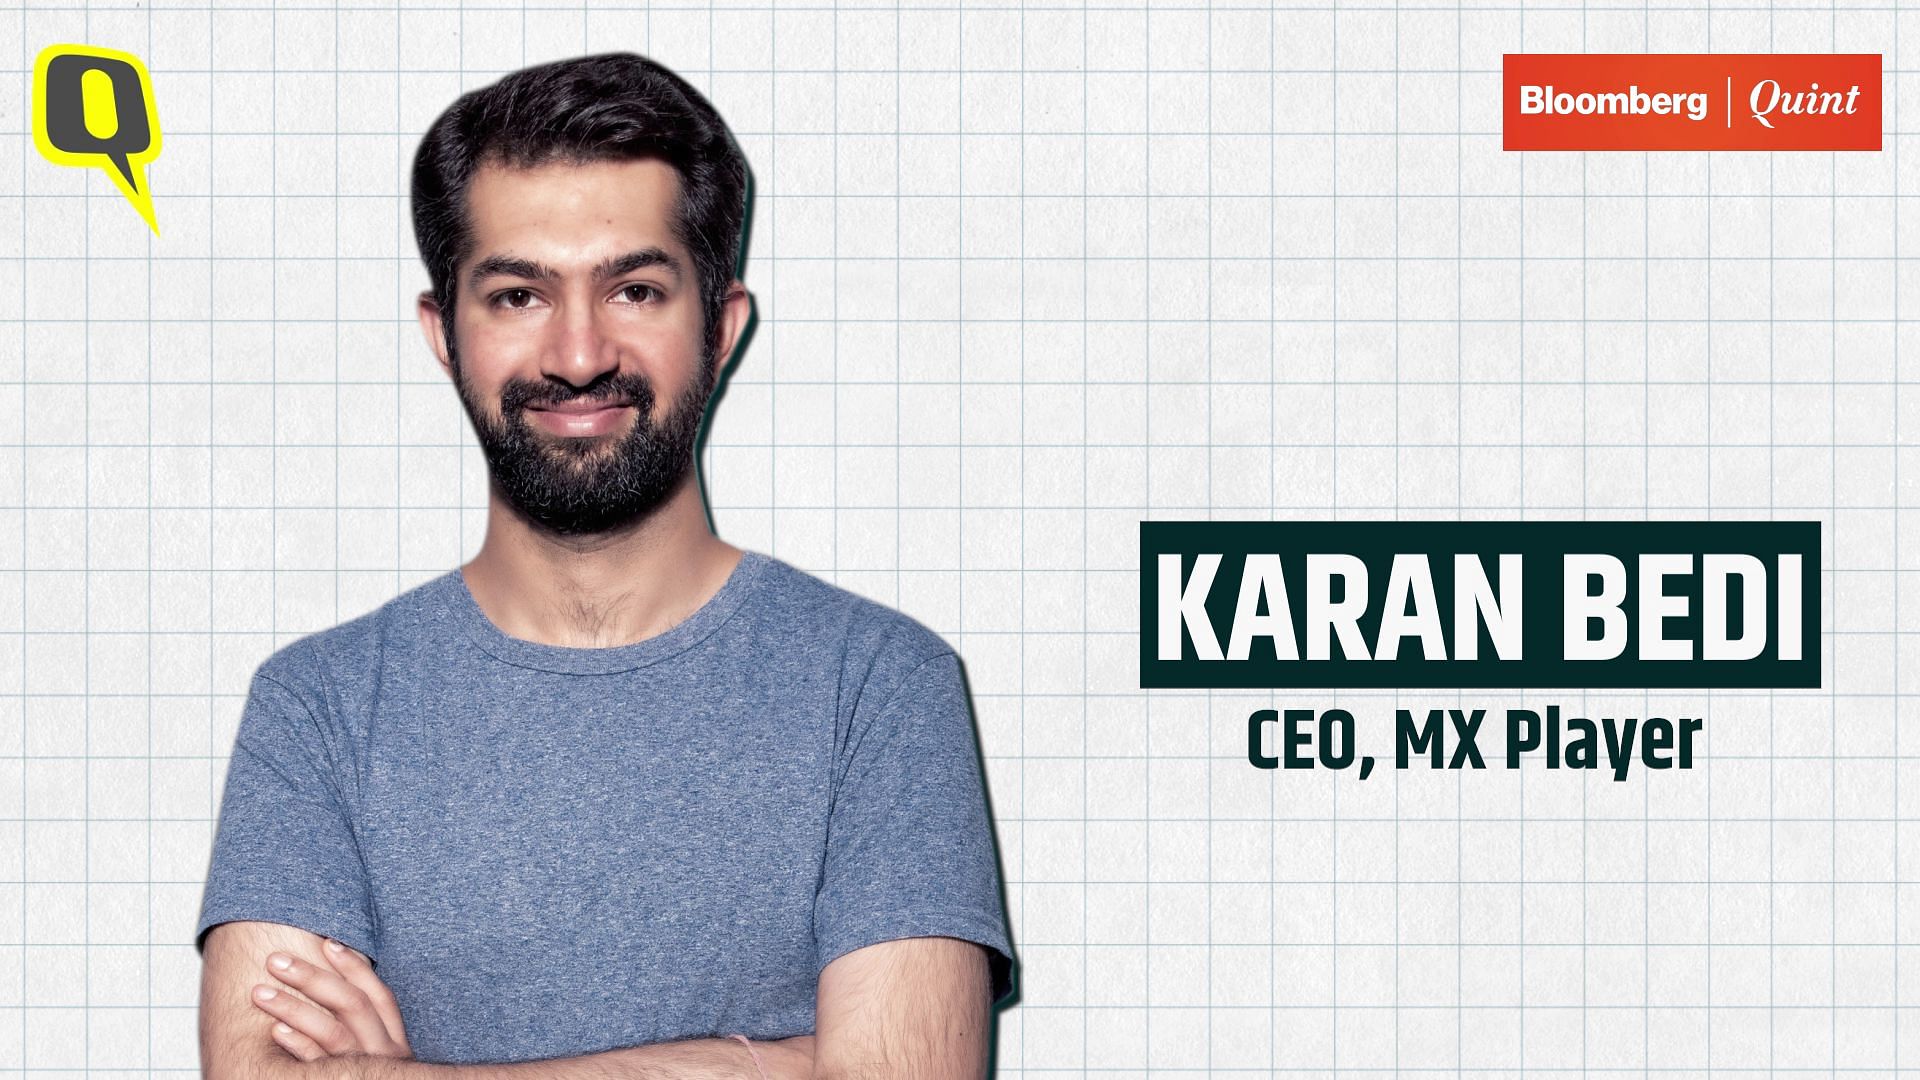 Karan Bedi, CEO, MX Player